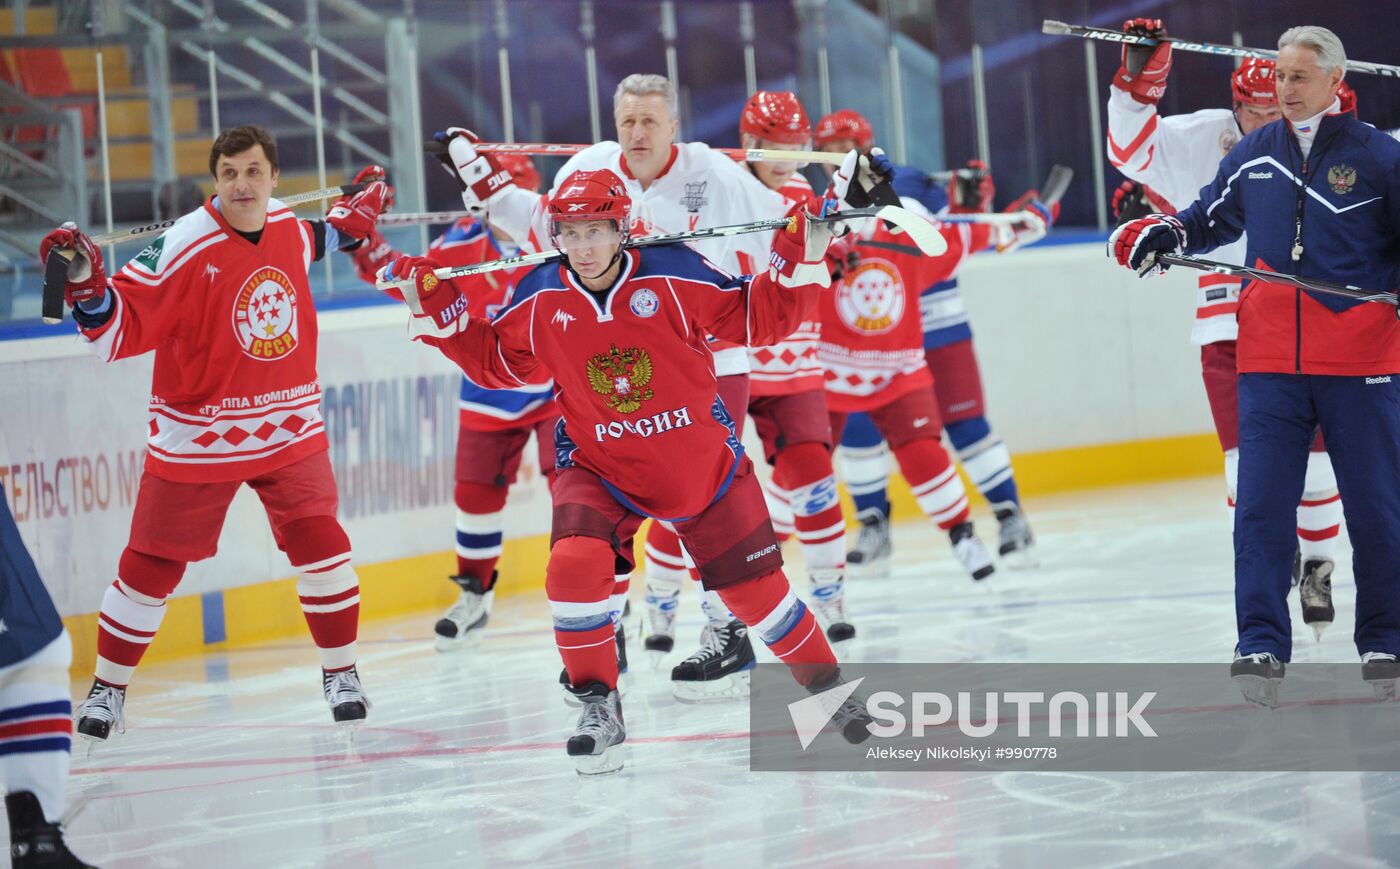 V. Putin joins training session of "Legends of USSR Hockey" club